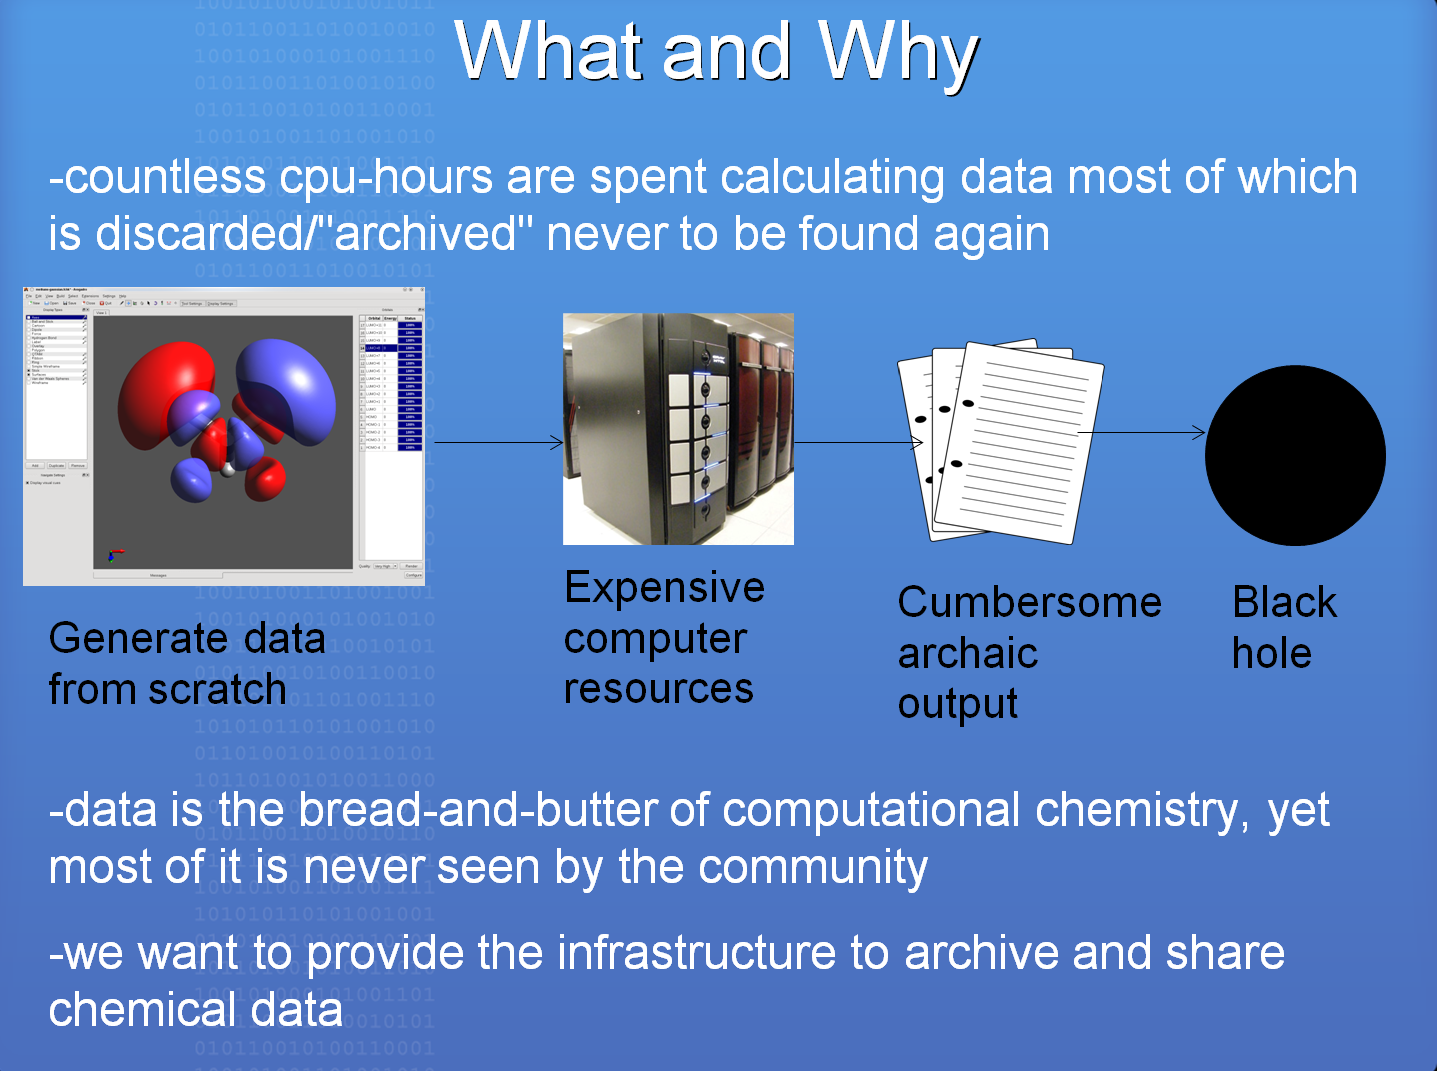 Second slide of Jens Thomas' rapid slide presentation